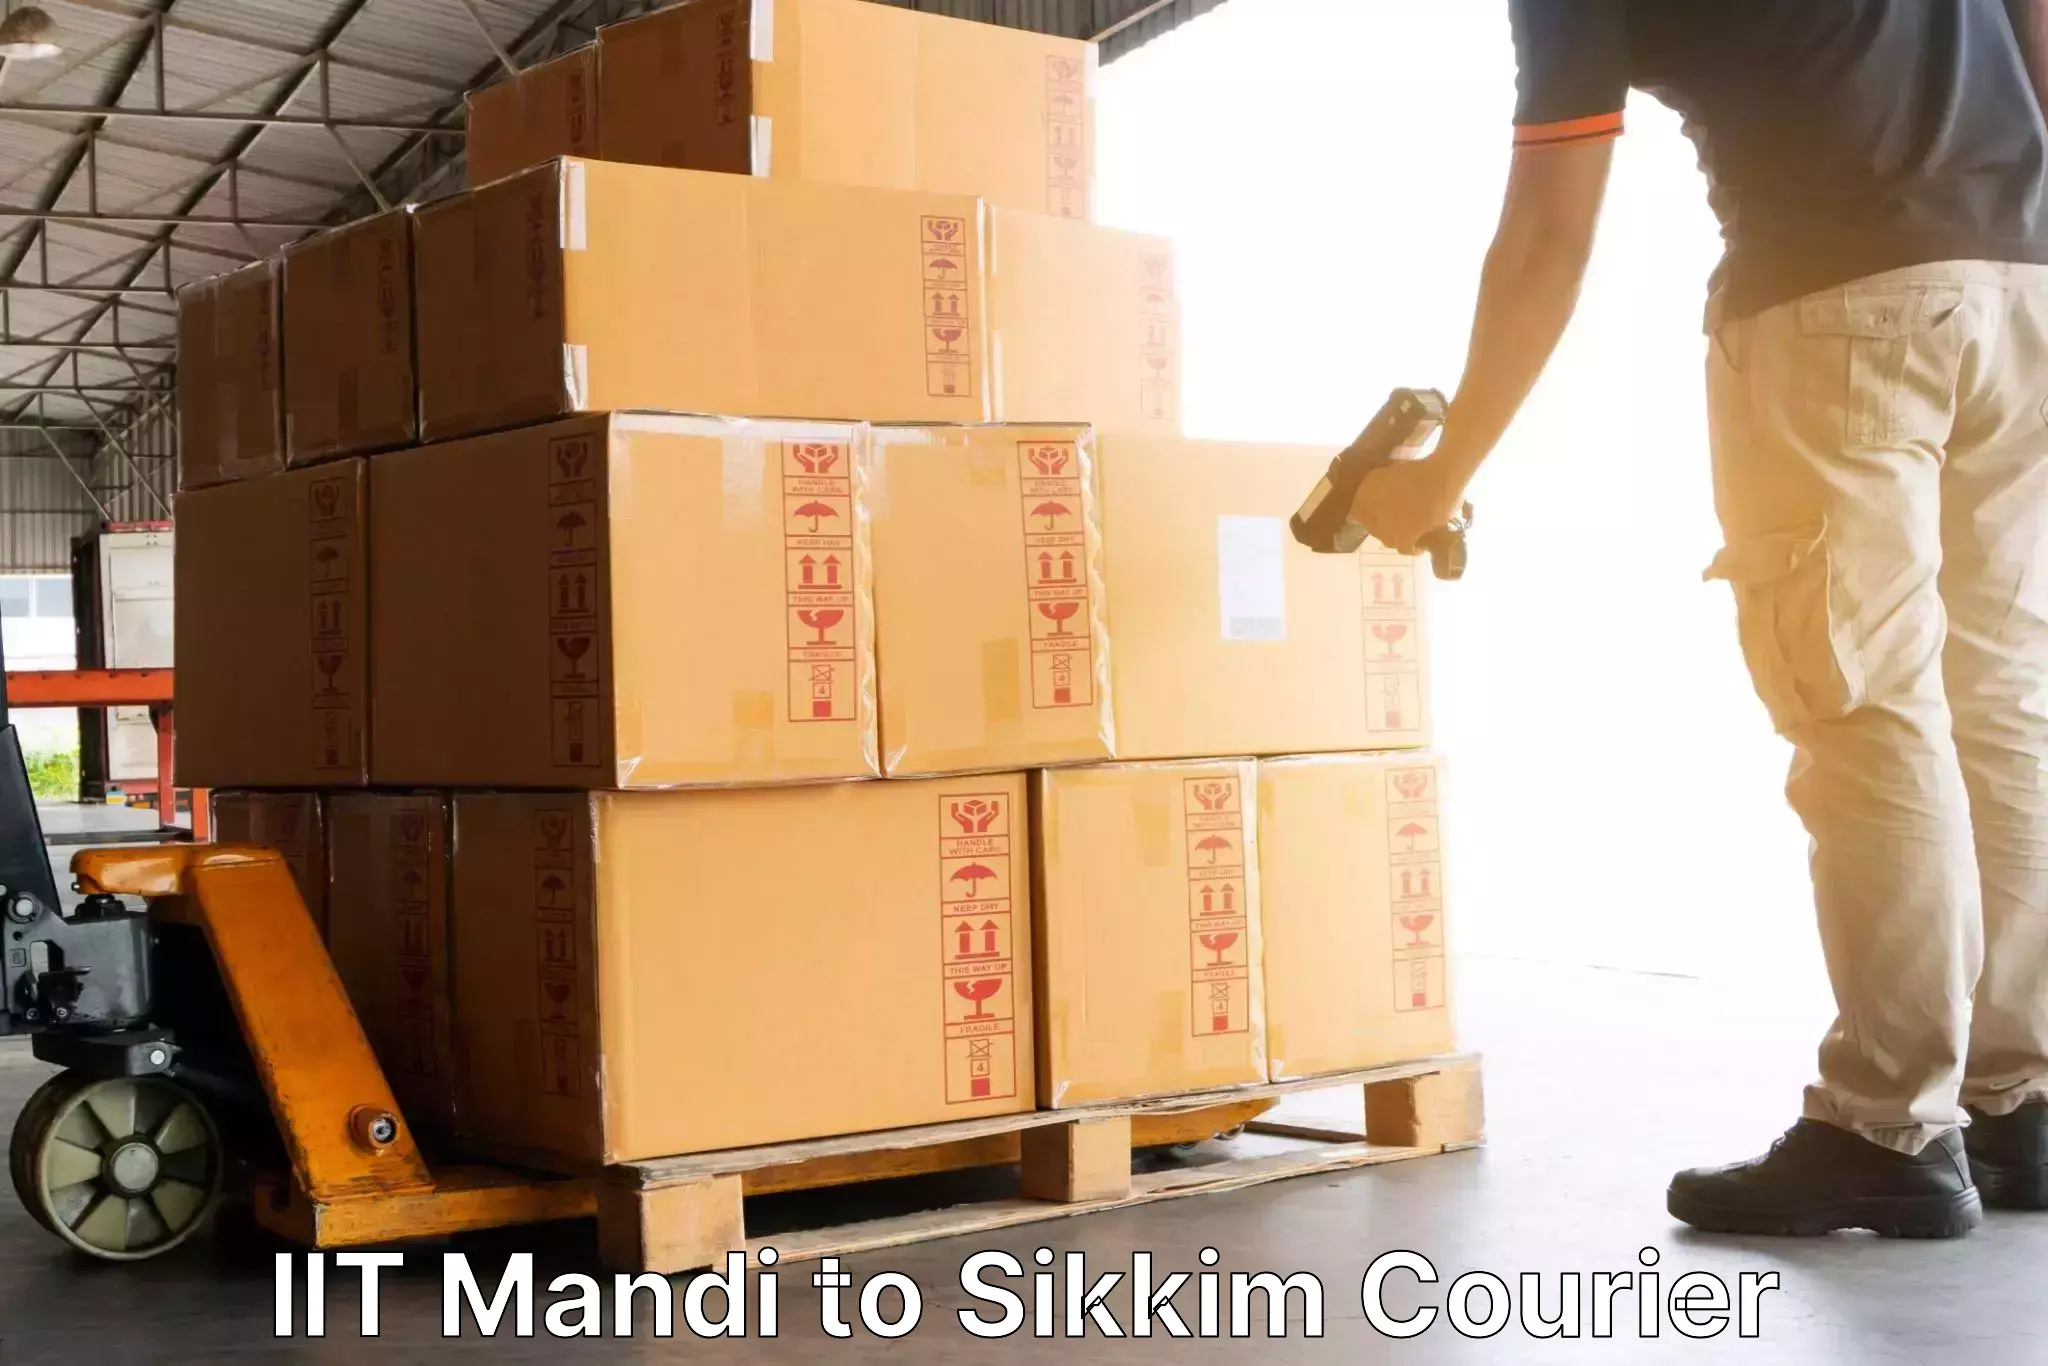 Courier service efficiency IIT Mandi to Gangtok